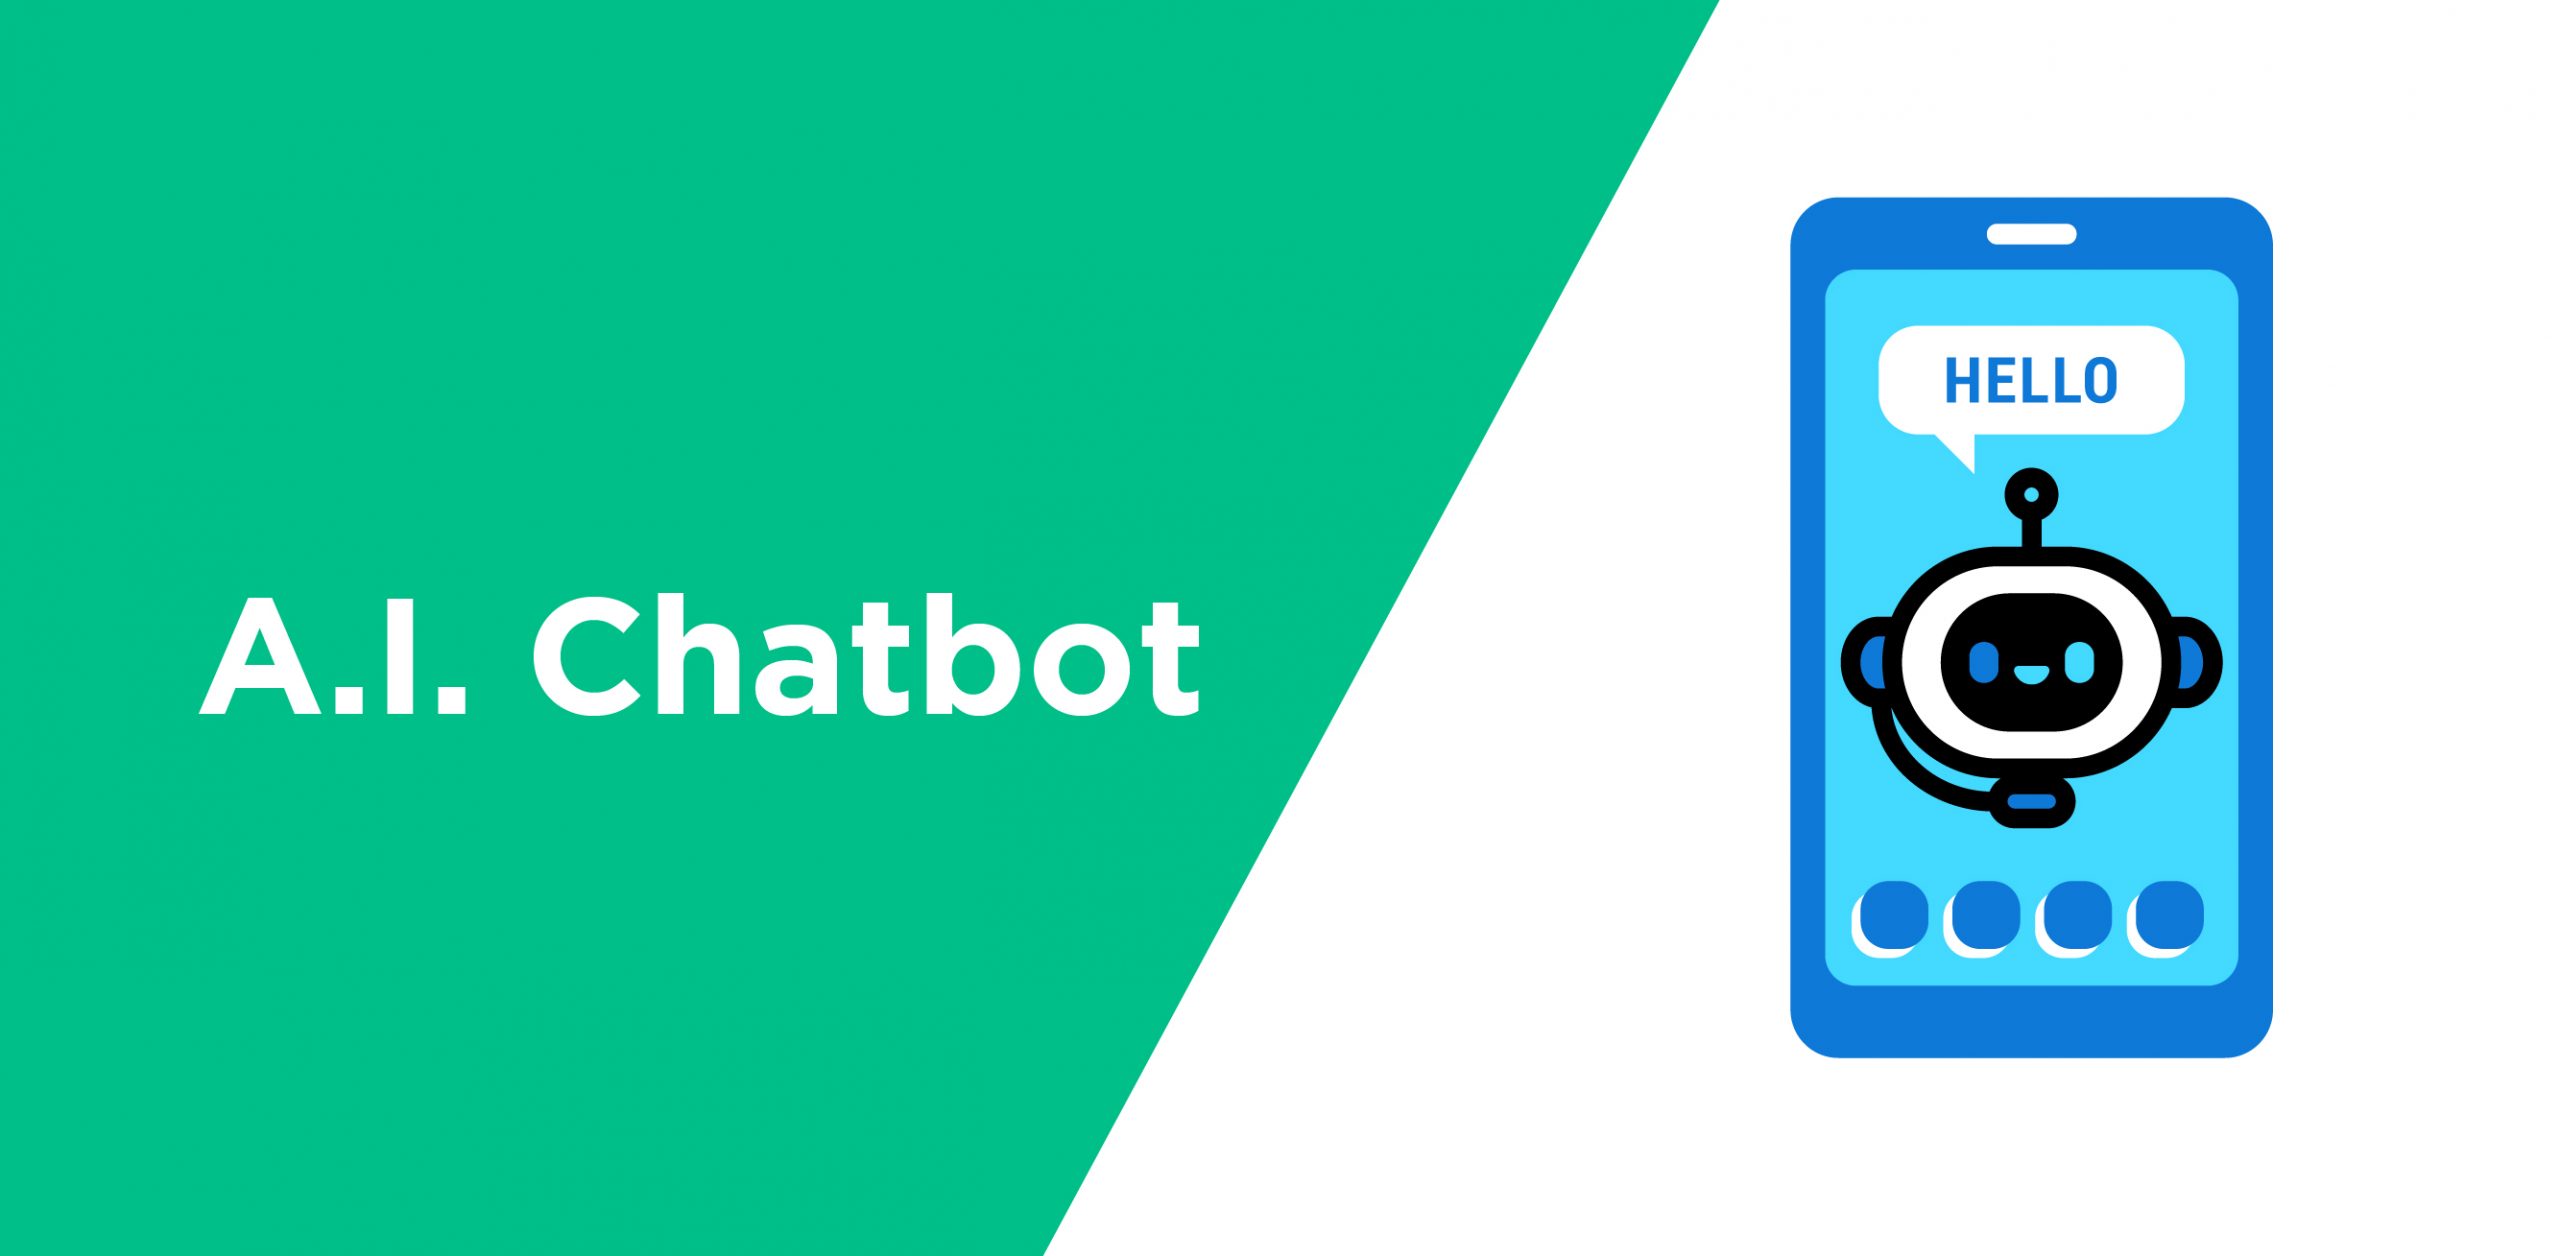 A.I. Chatbot